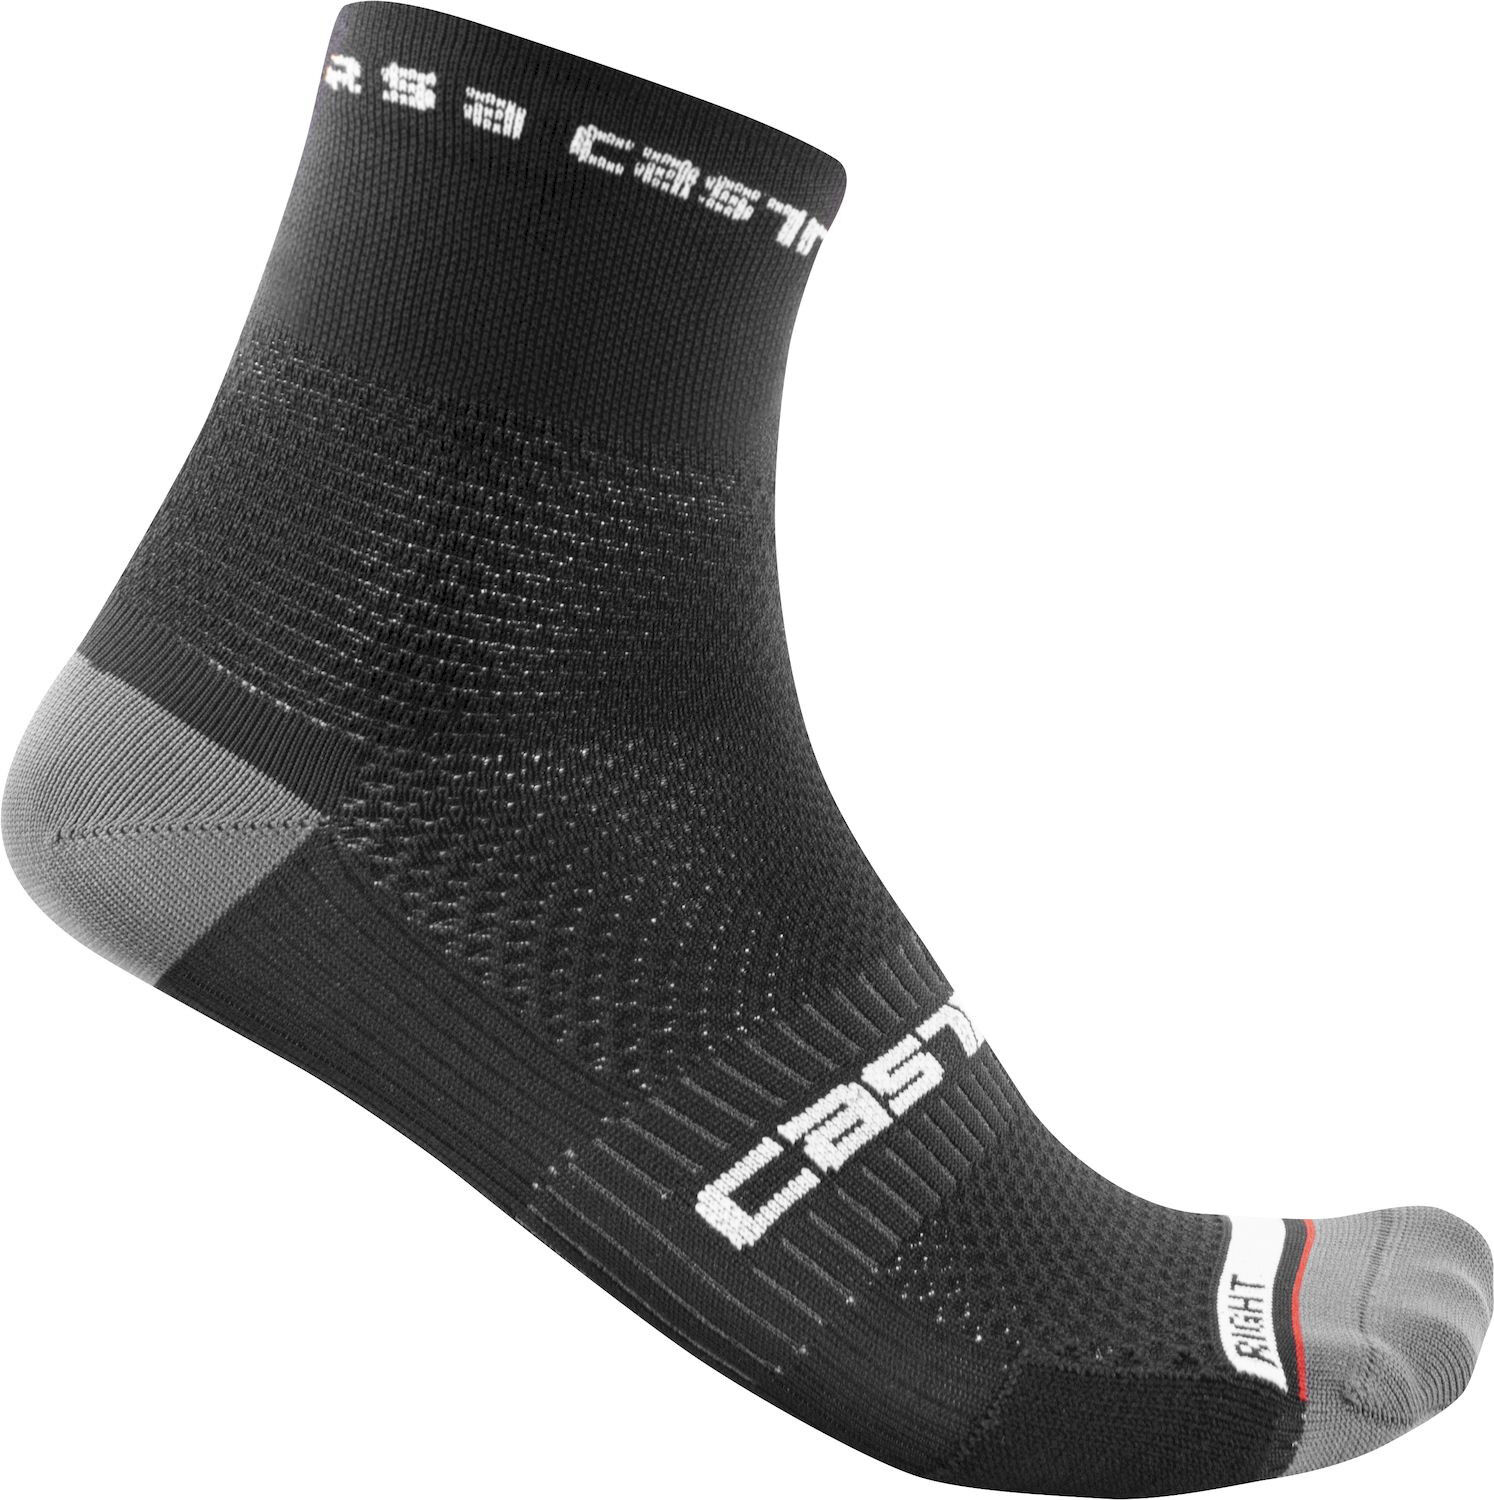 Castelli Rosso Corsa Pro 9 - Cycling socks